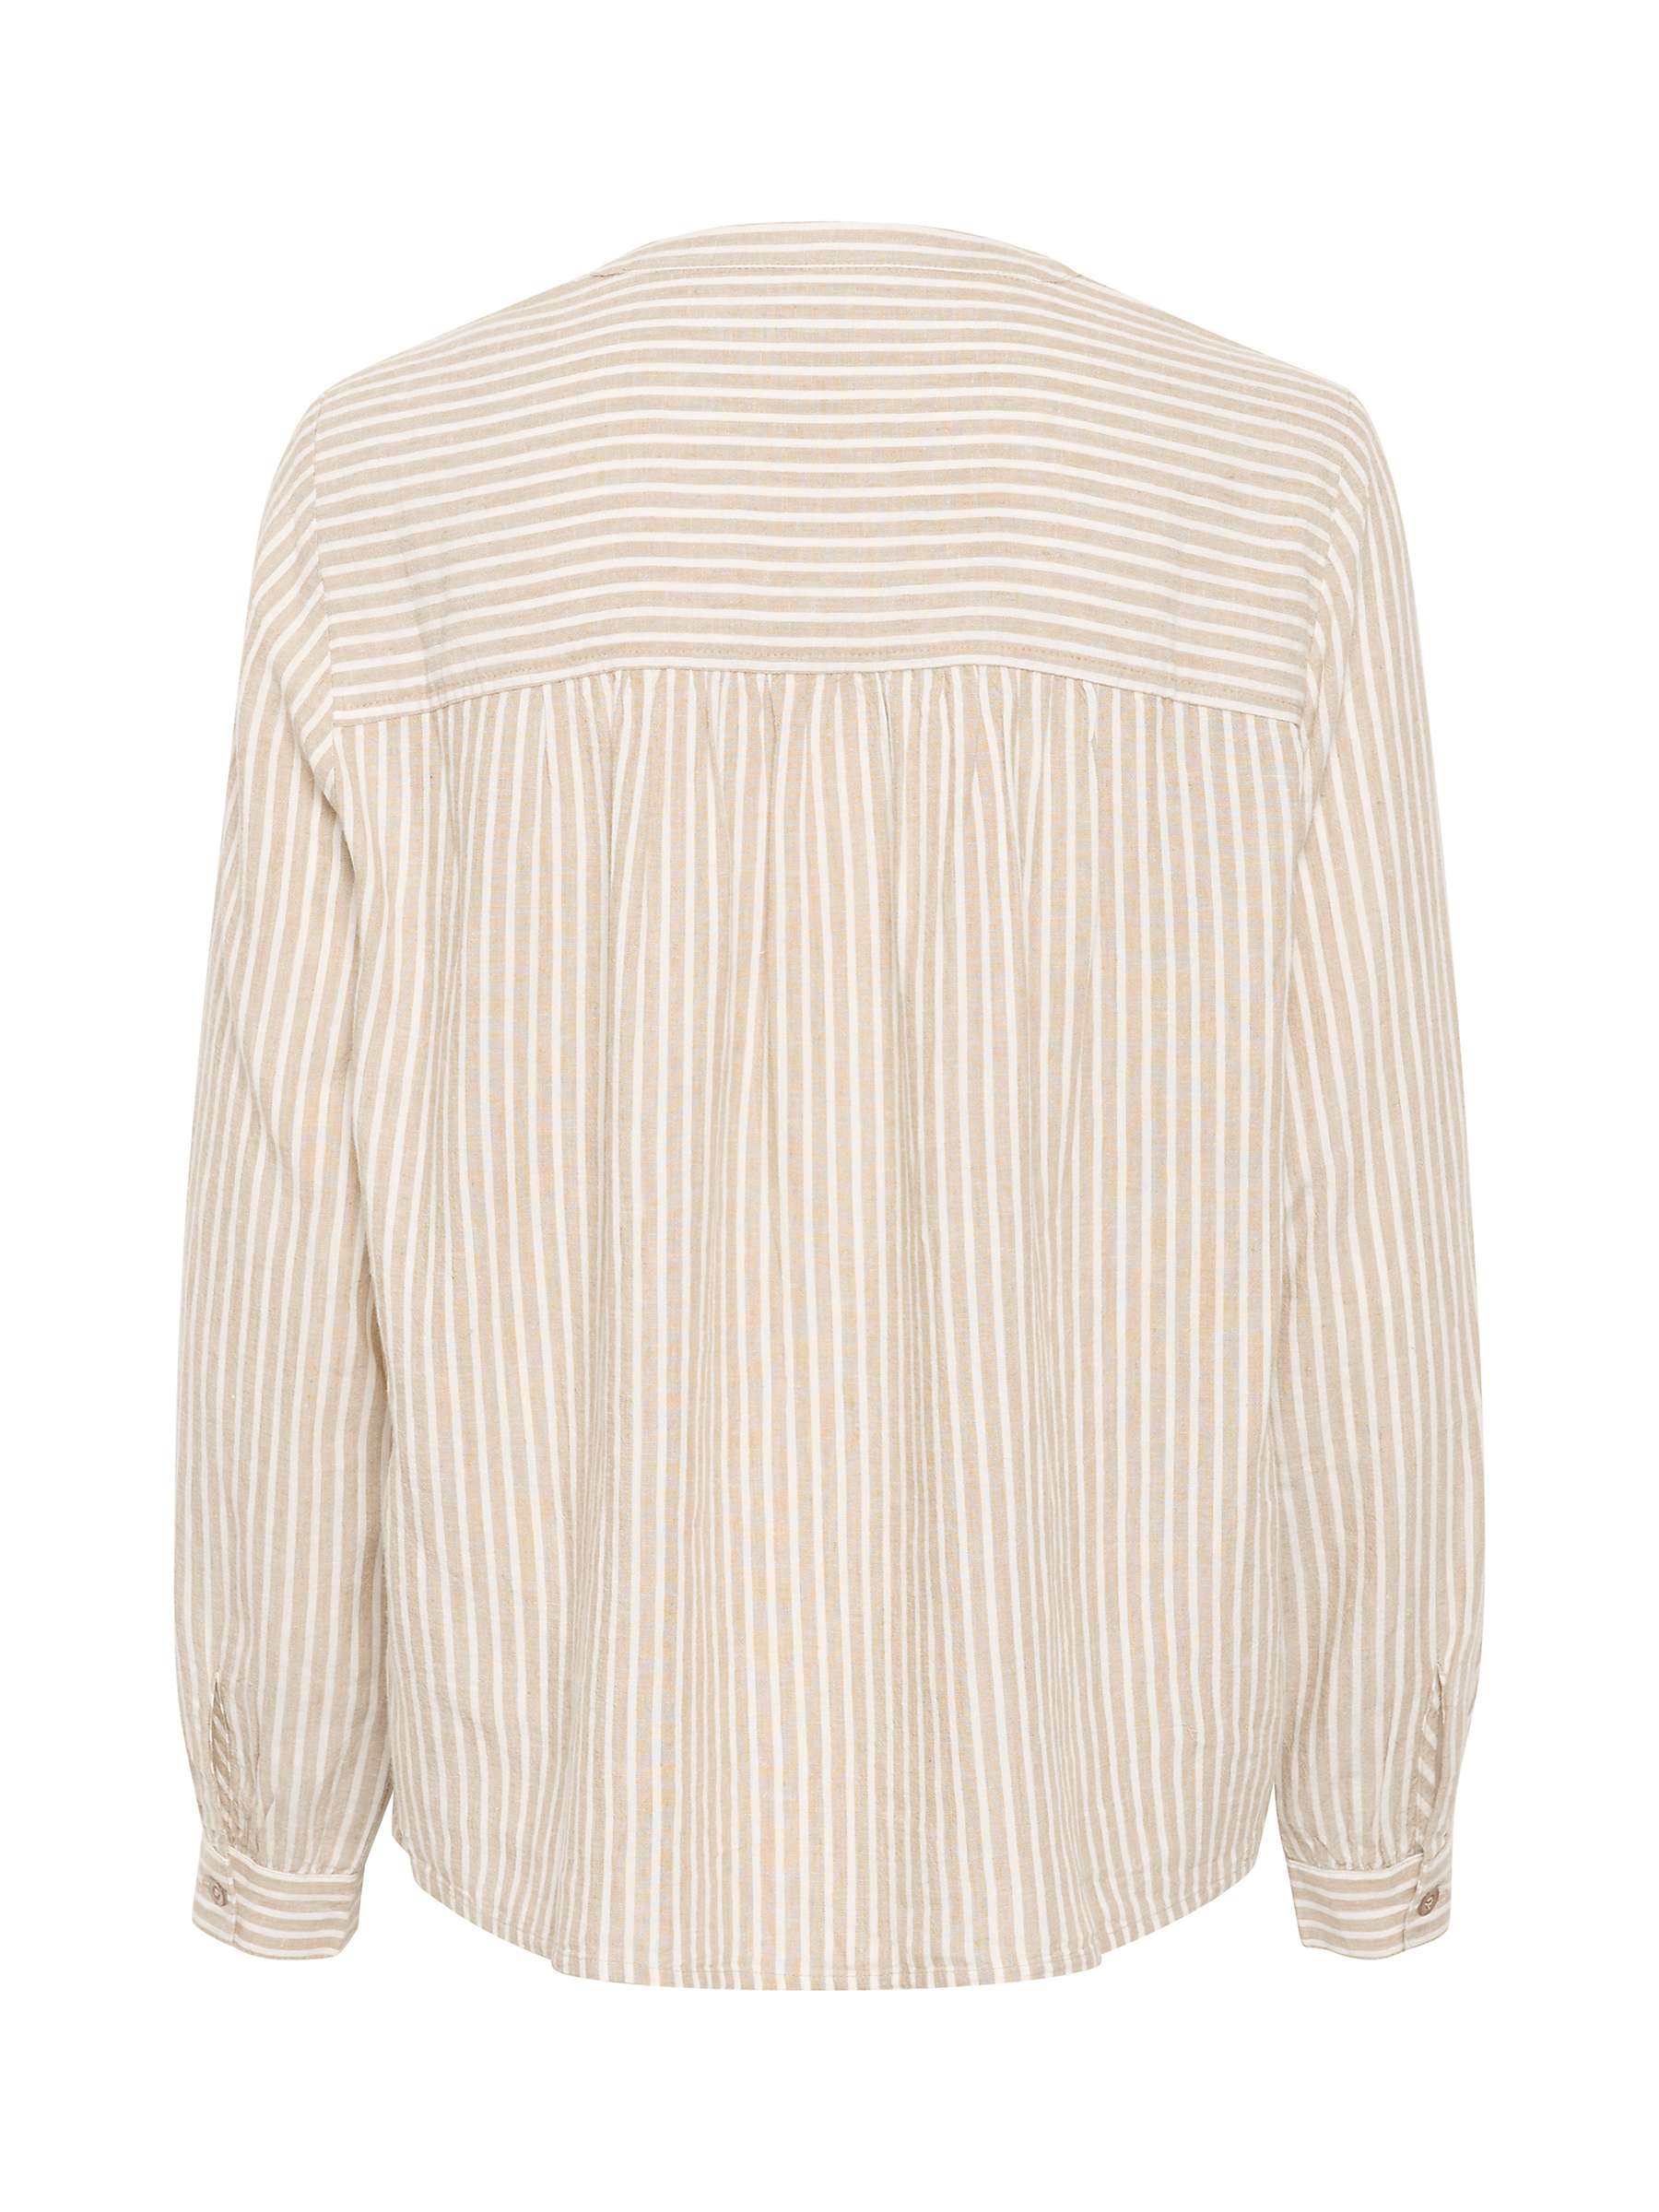 Buy KAFFE Milia Linen Blend Stripe Blouse Online at johnlewis.com